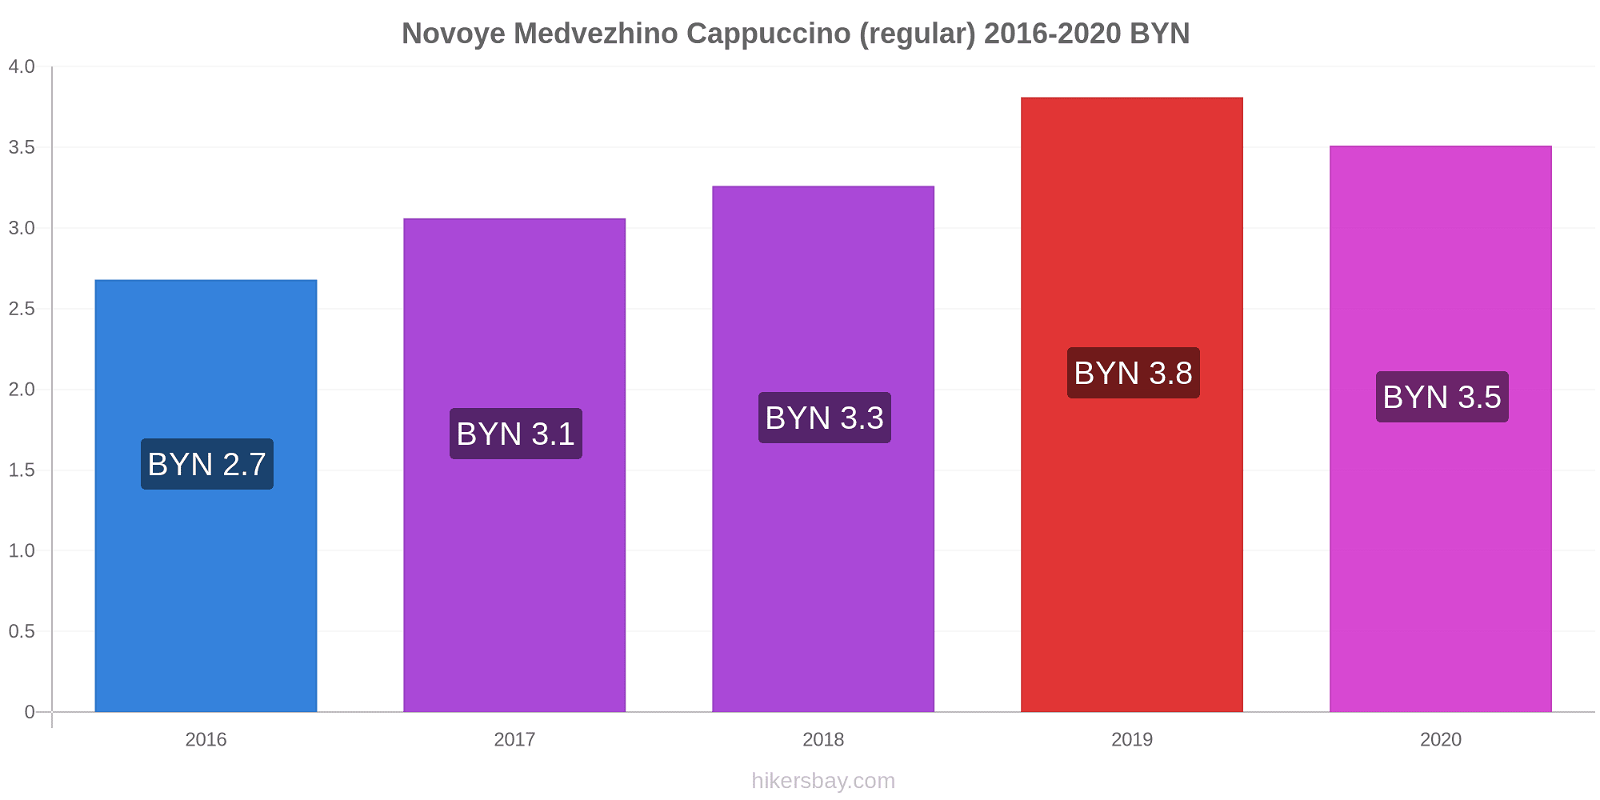 Novoye Medvezhino price changes Cappuccino (regular) hikersbay.com